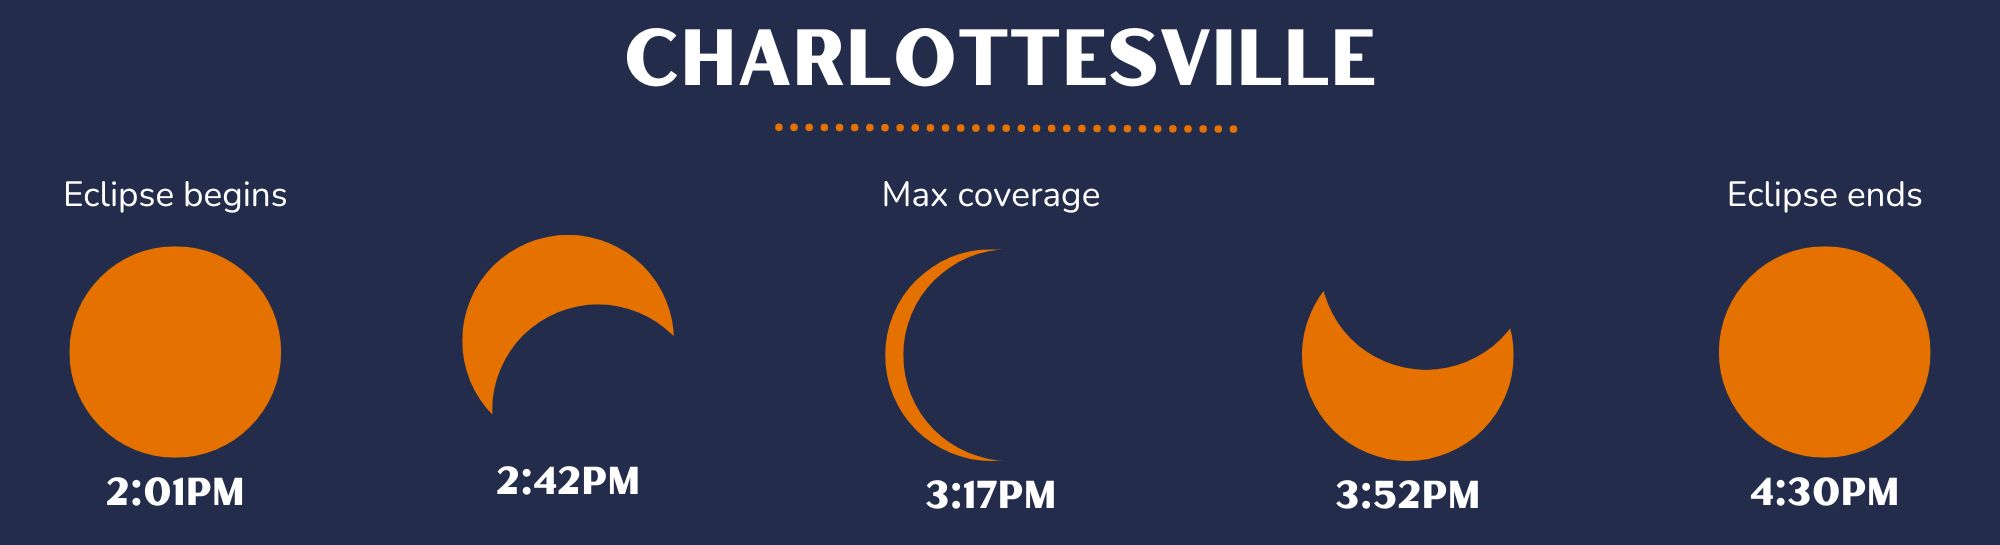 Charlottesville Eclipse